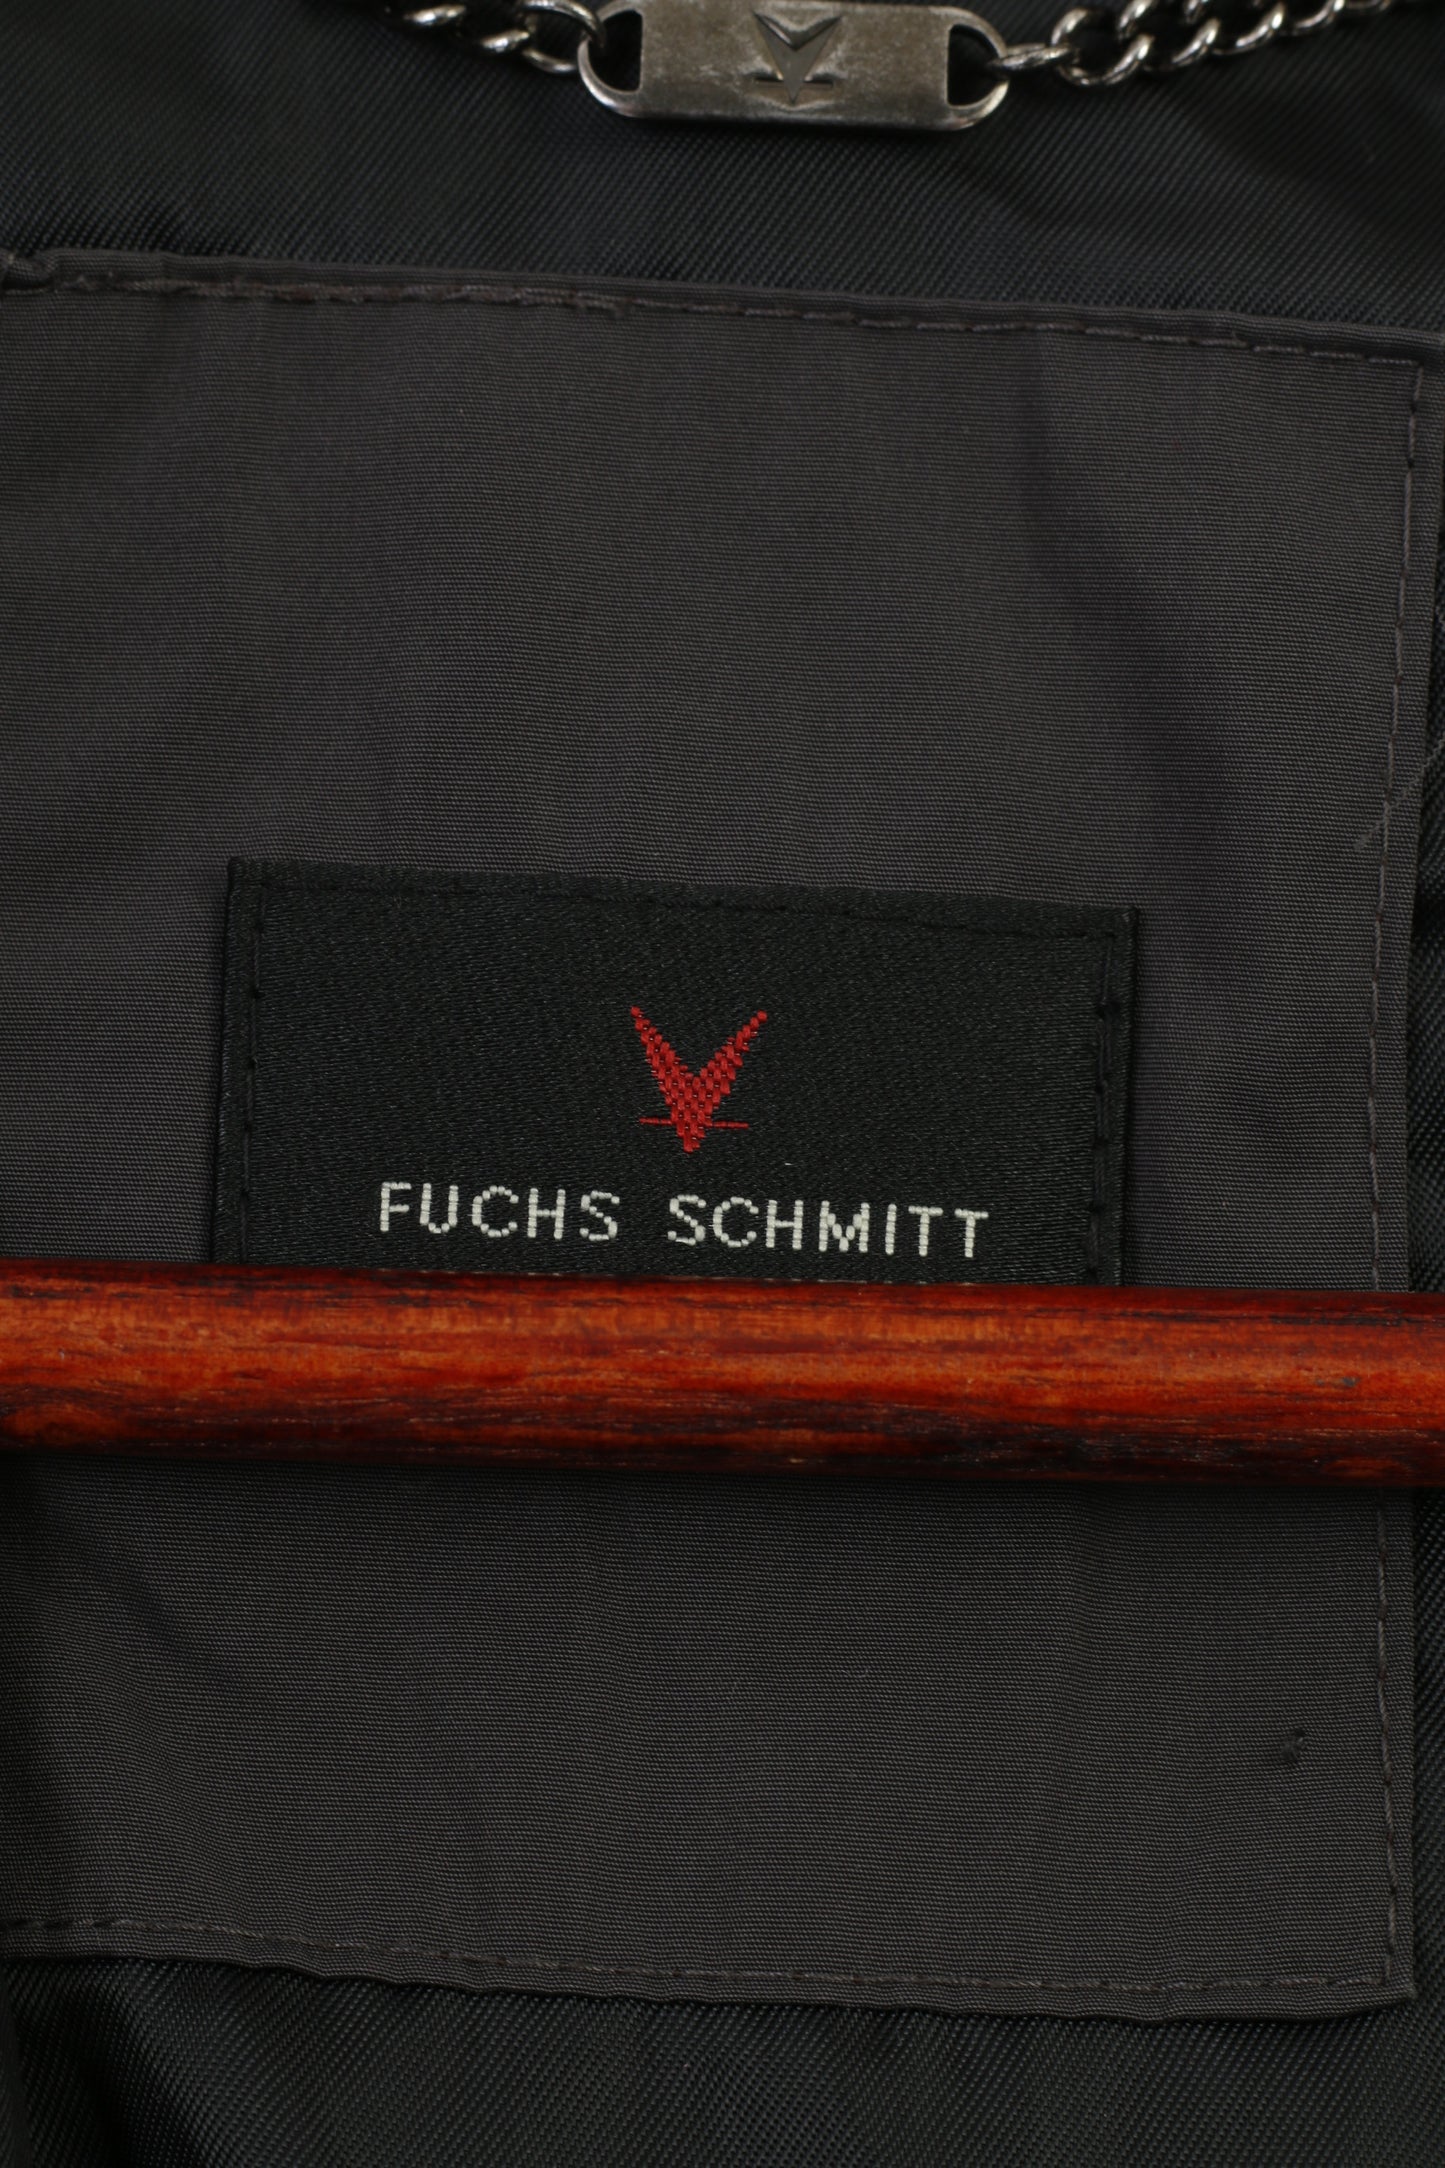 Fuchs Schmitt Woman 12 38 M Jacket Gray Full Zipper Belt Padded Vintage Pockets Coat